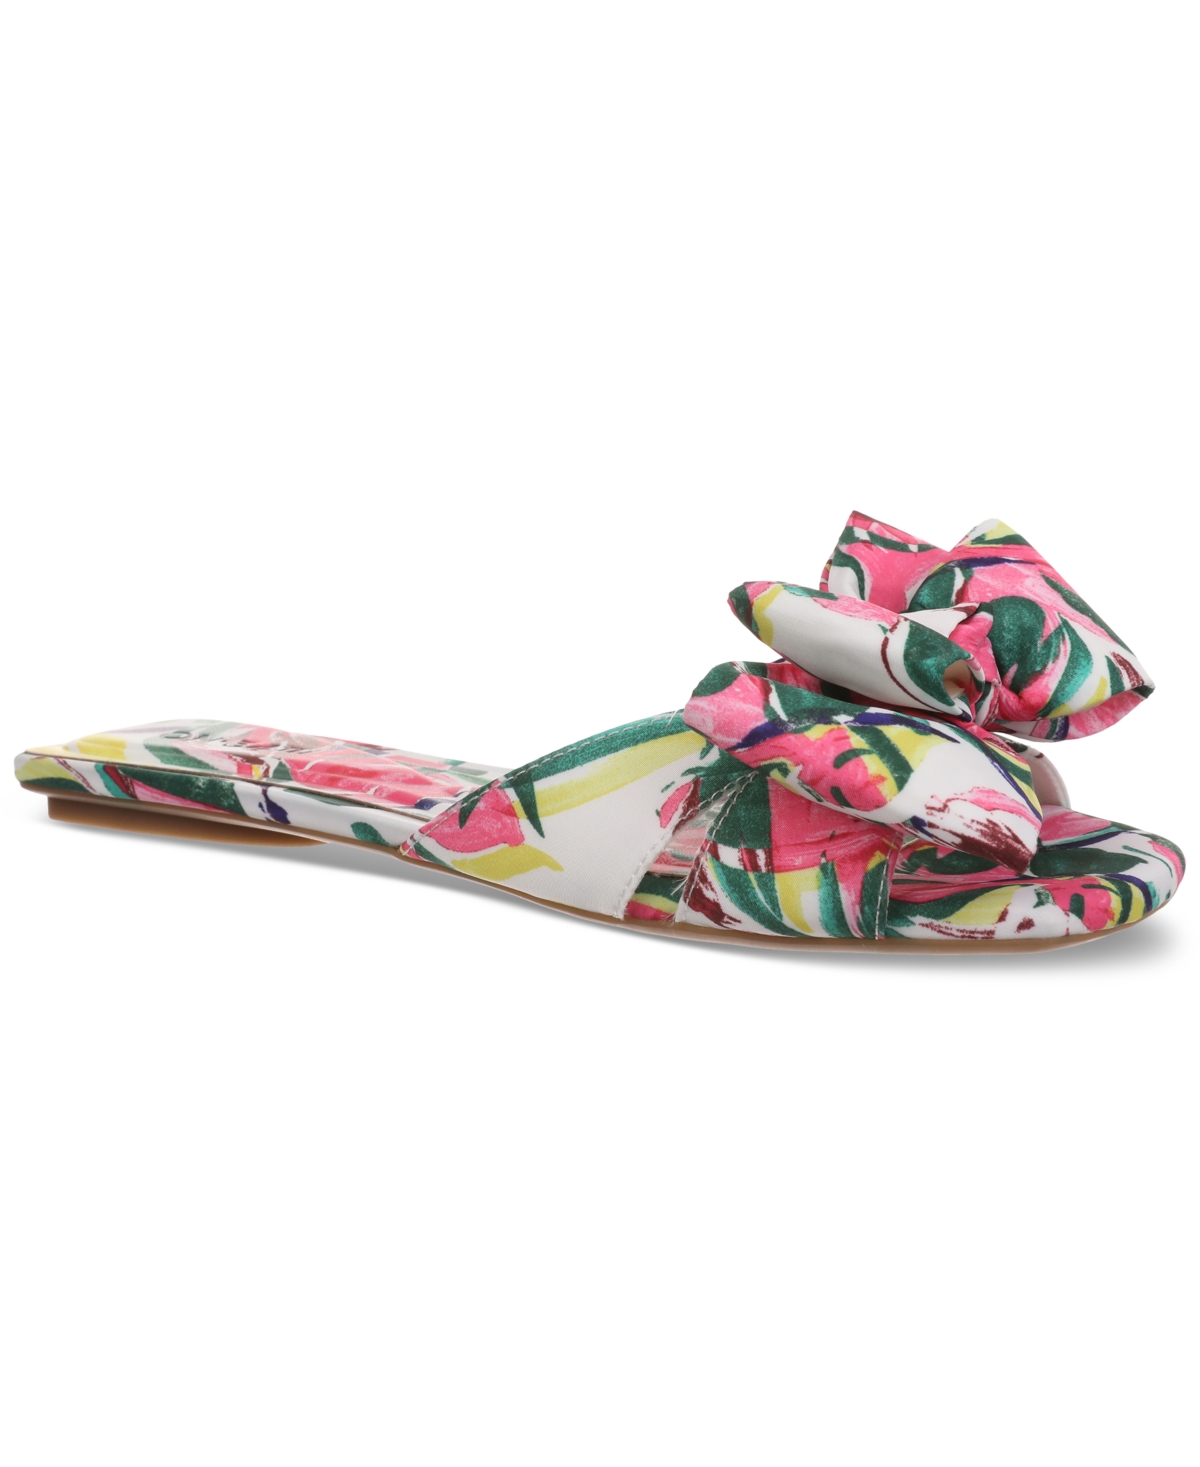 Women's Jazminn Bow Slip-On Slide Flat Sandals, Created for Macy's - Floral Fabric